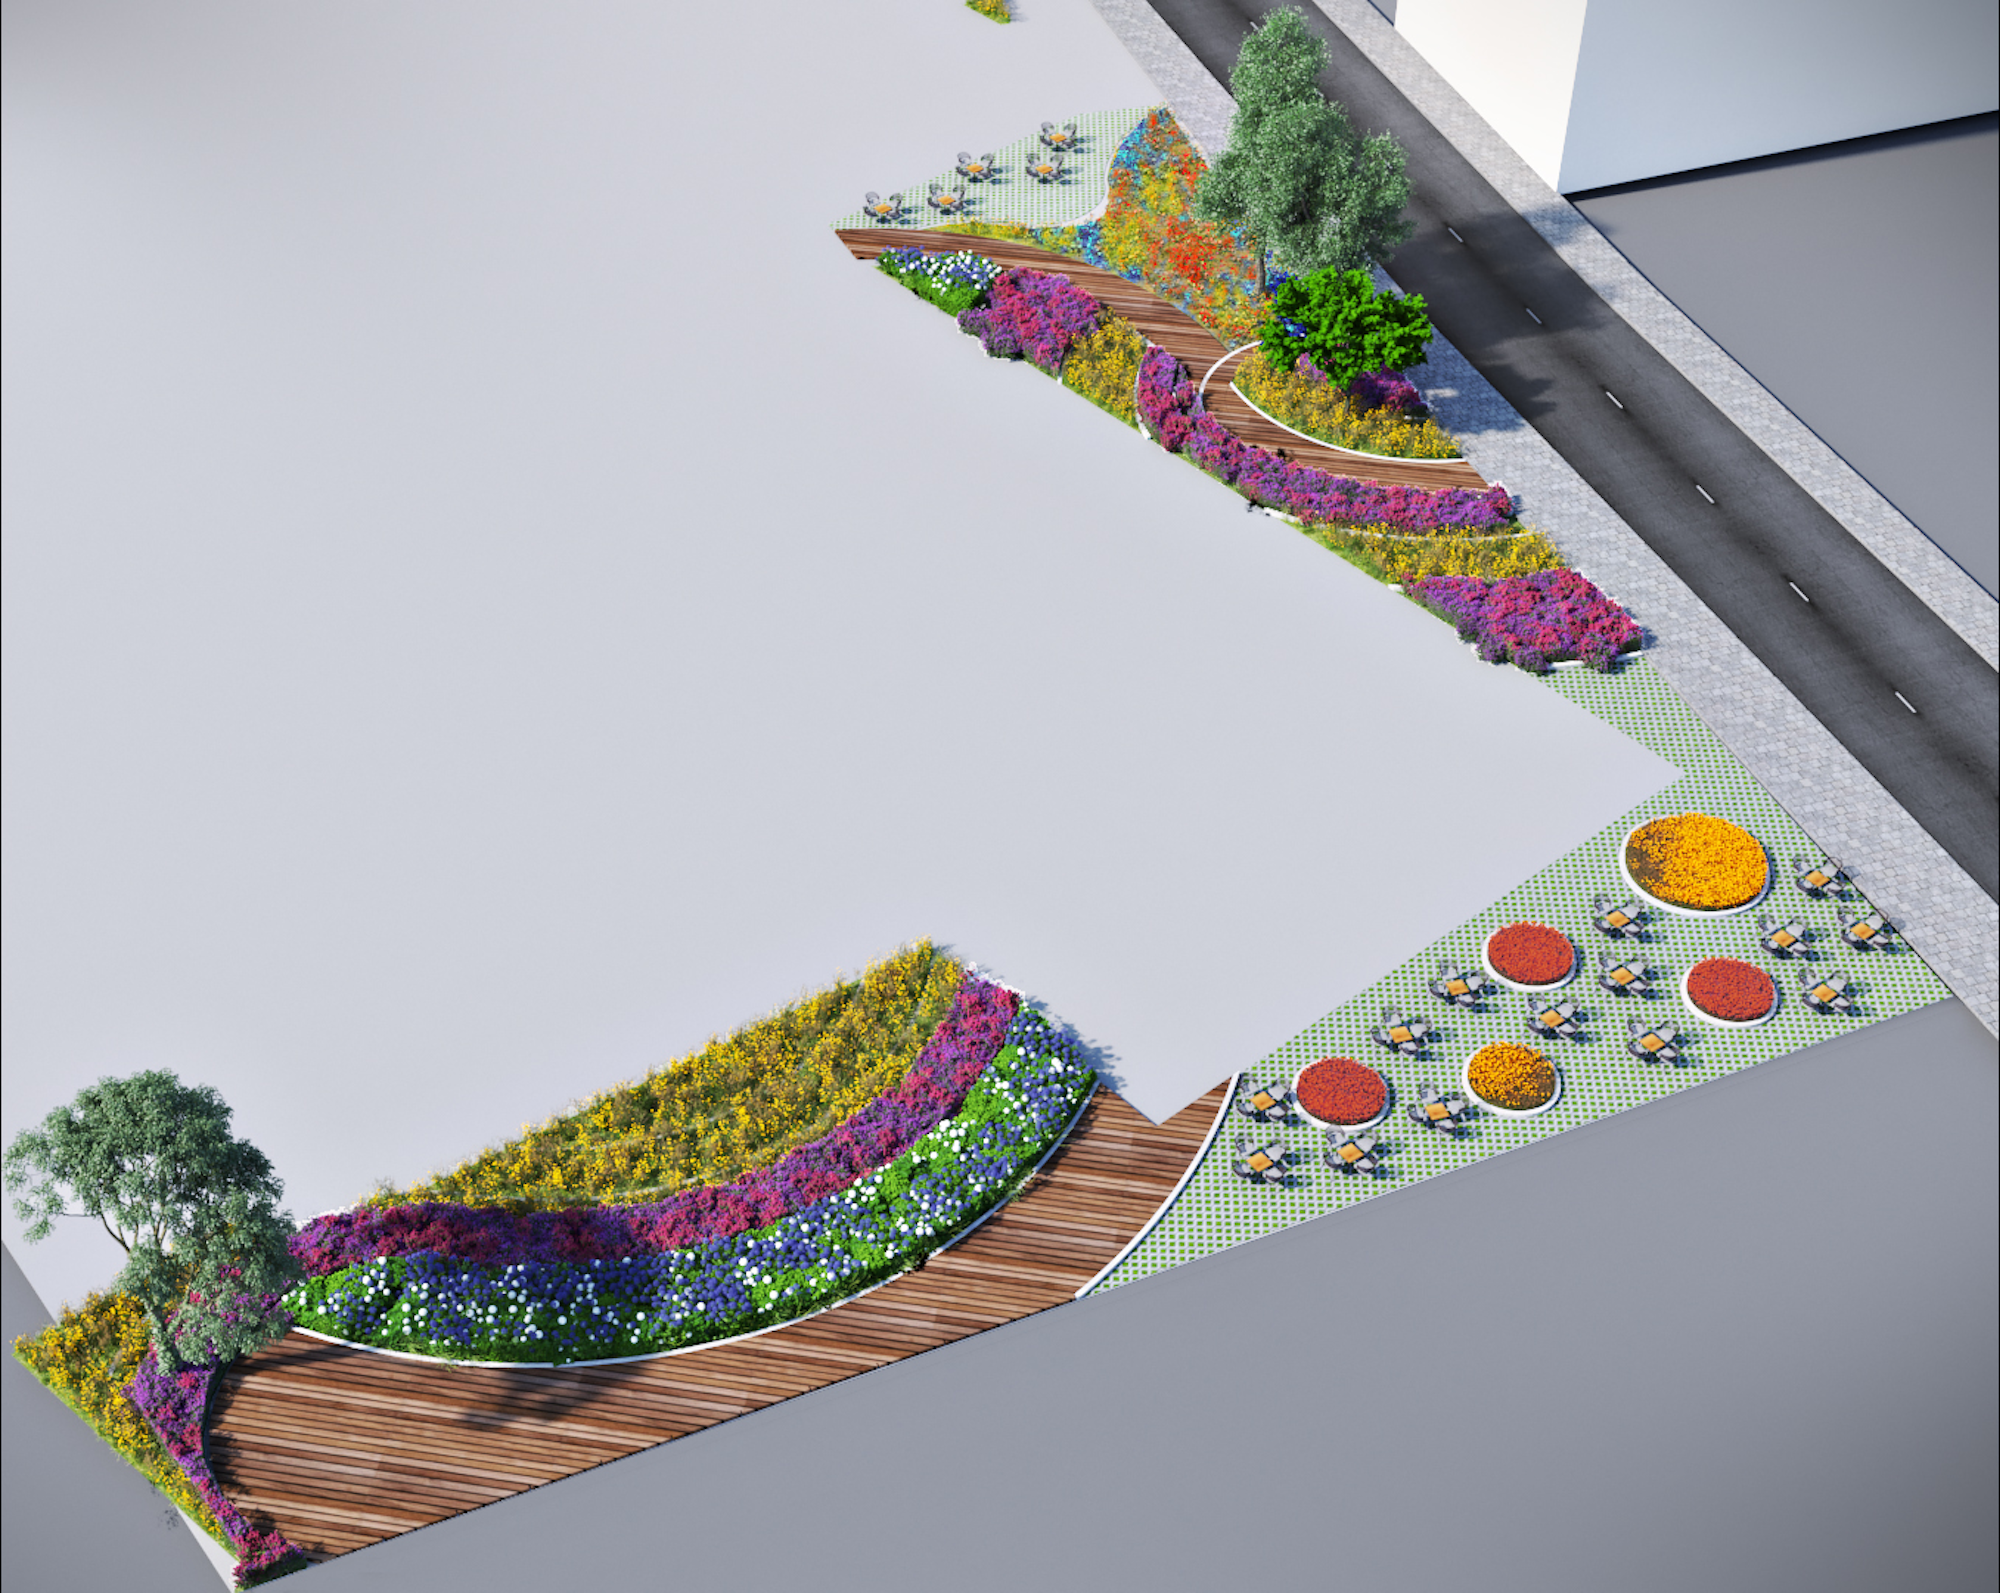 Plan view of landscape design for a commercial site